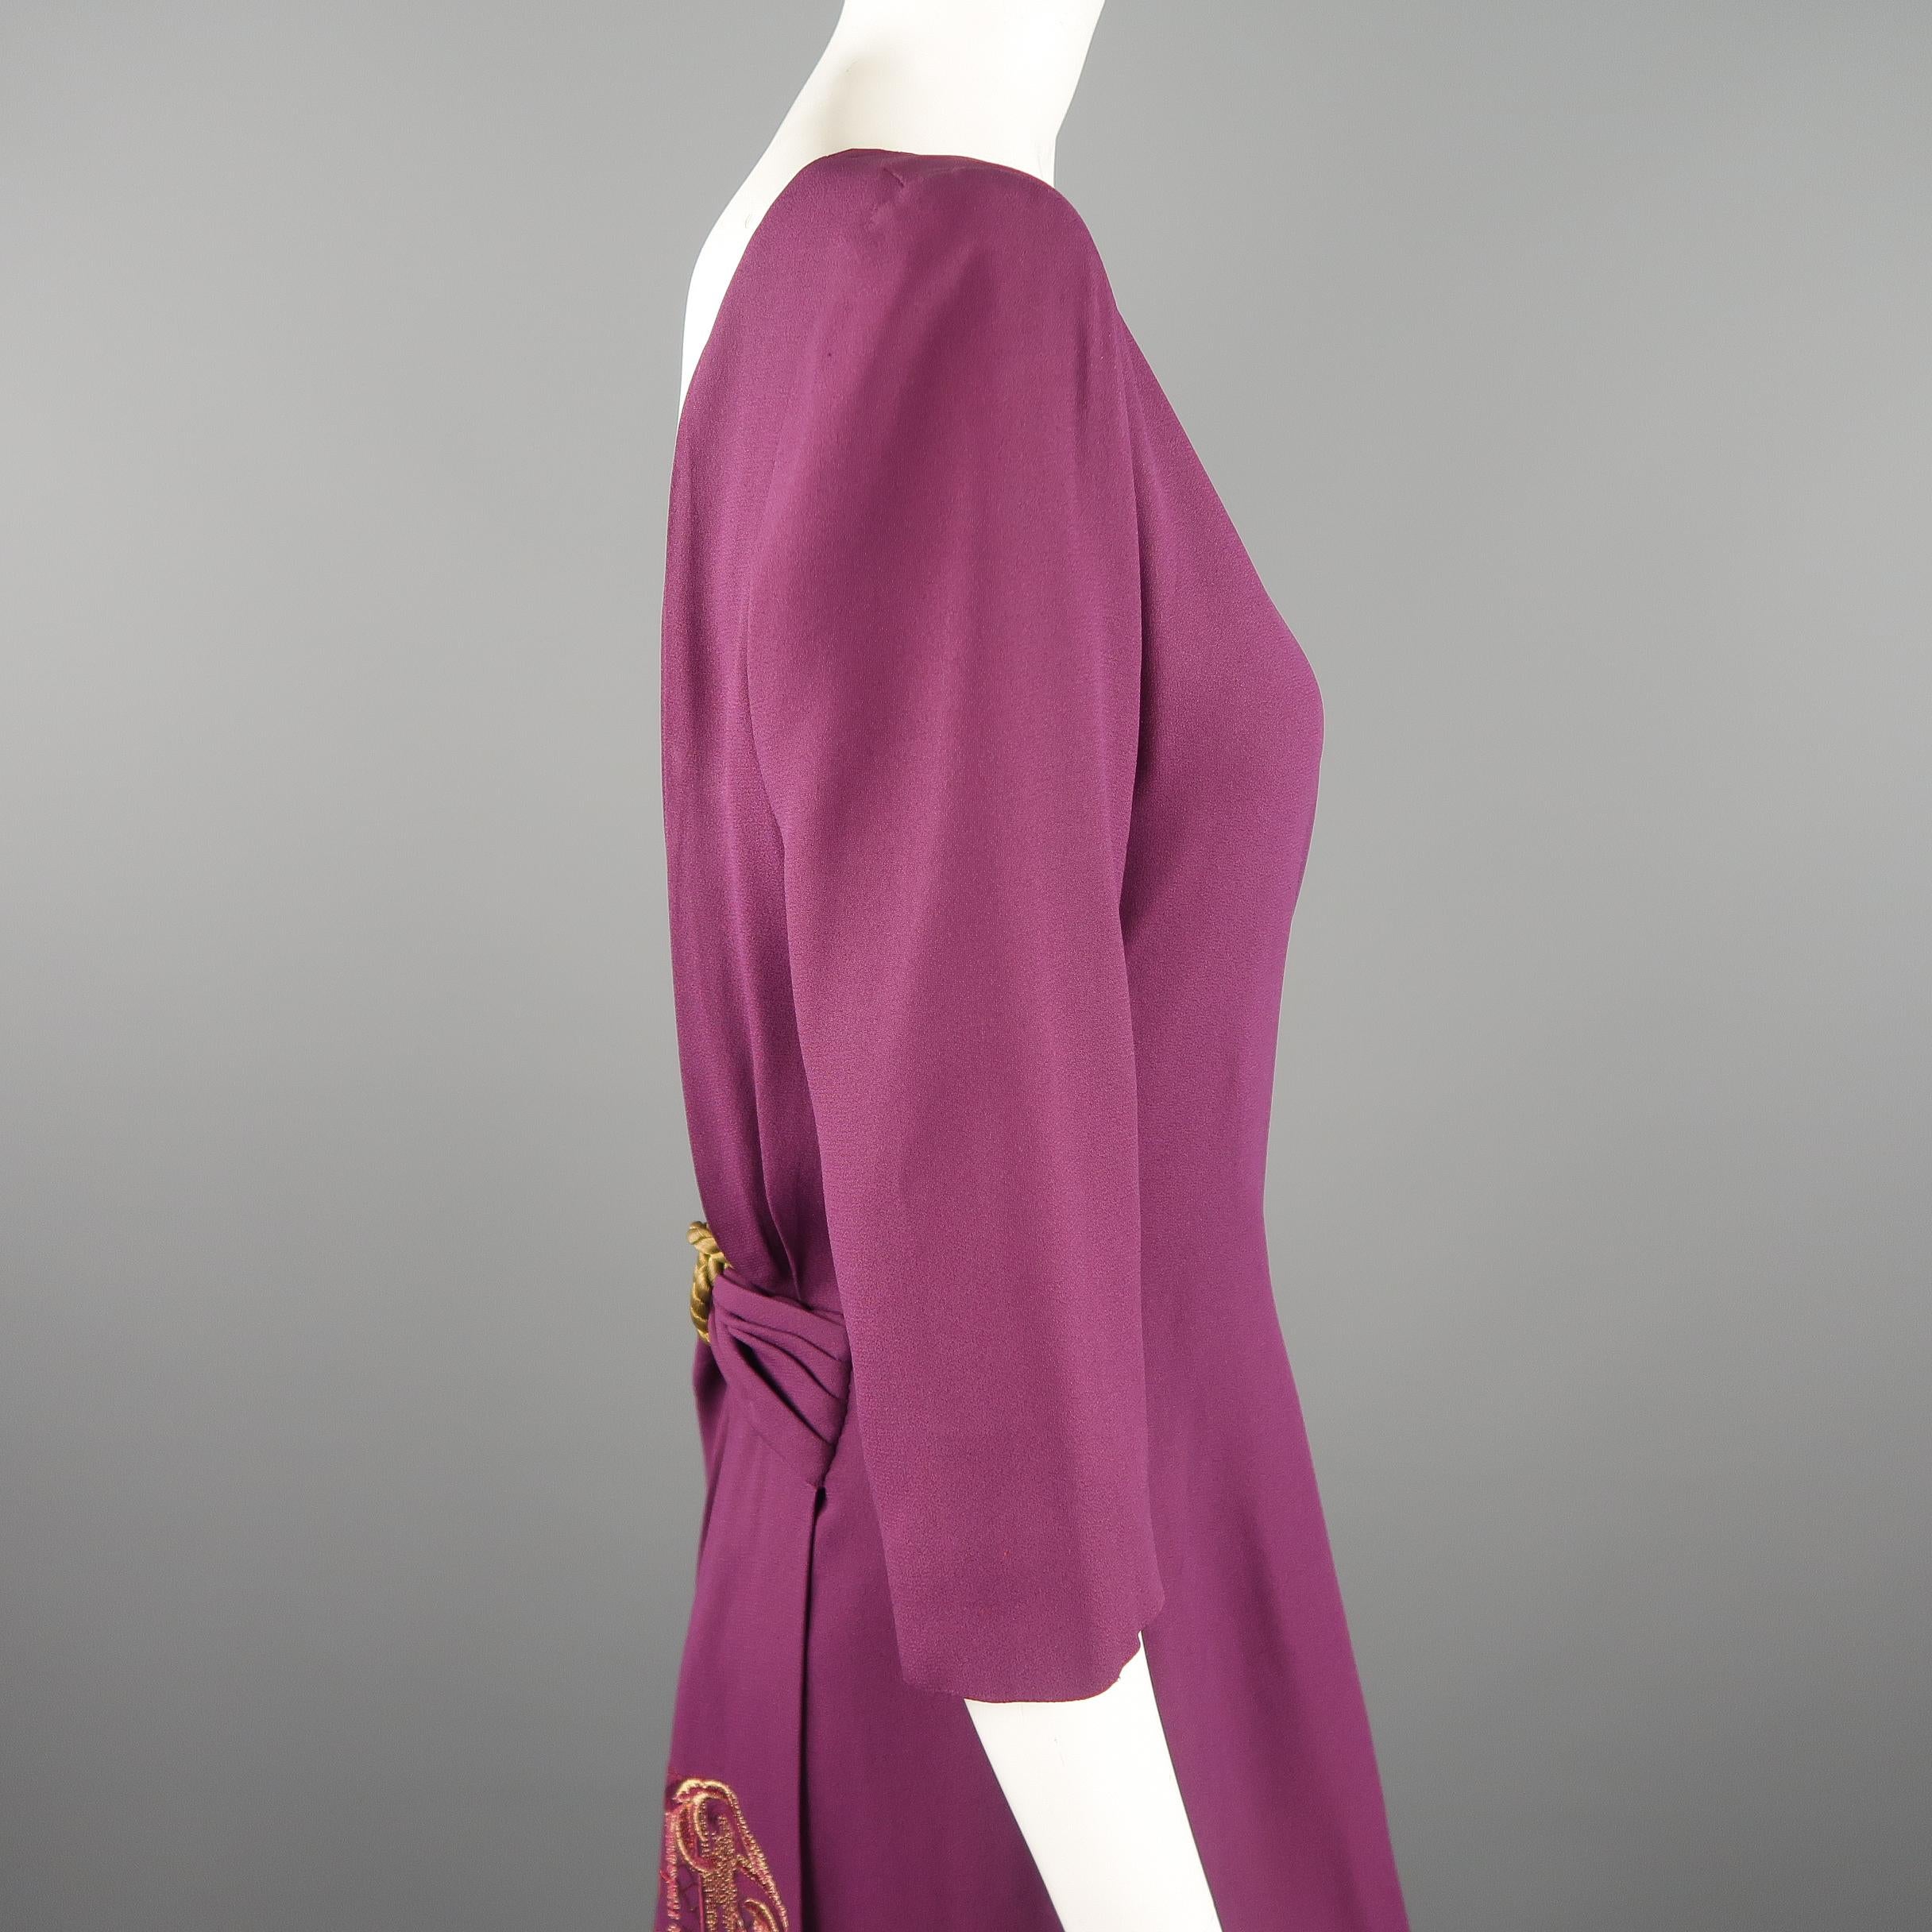 purple sash for dress